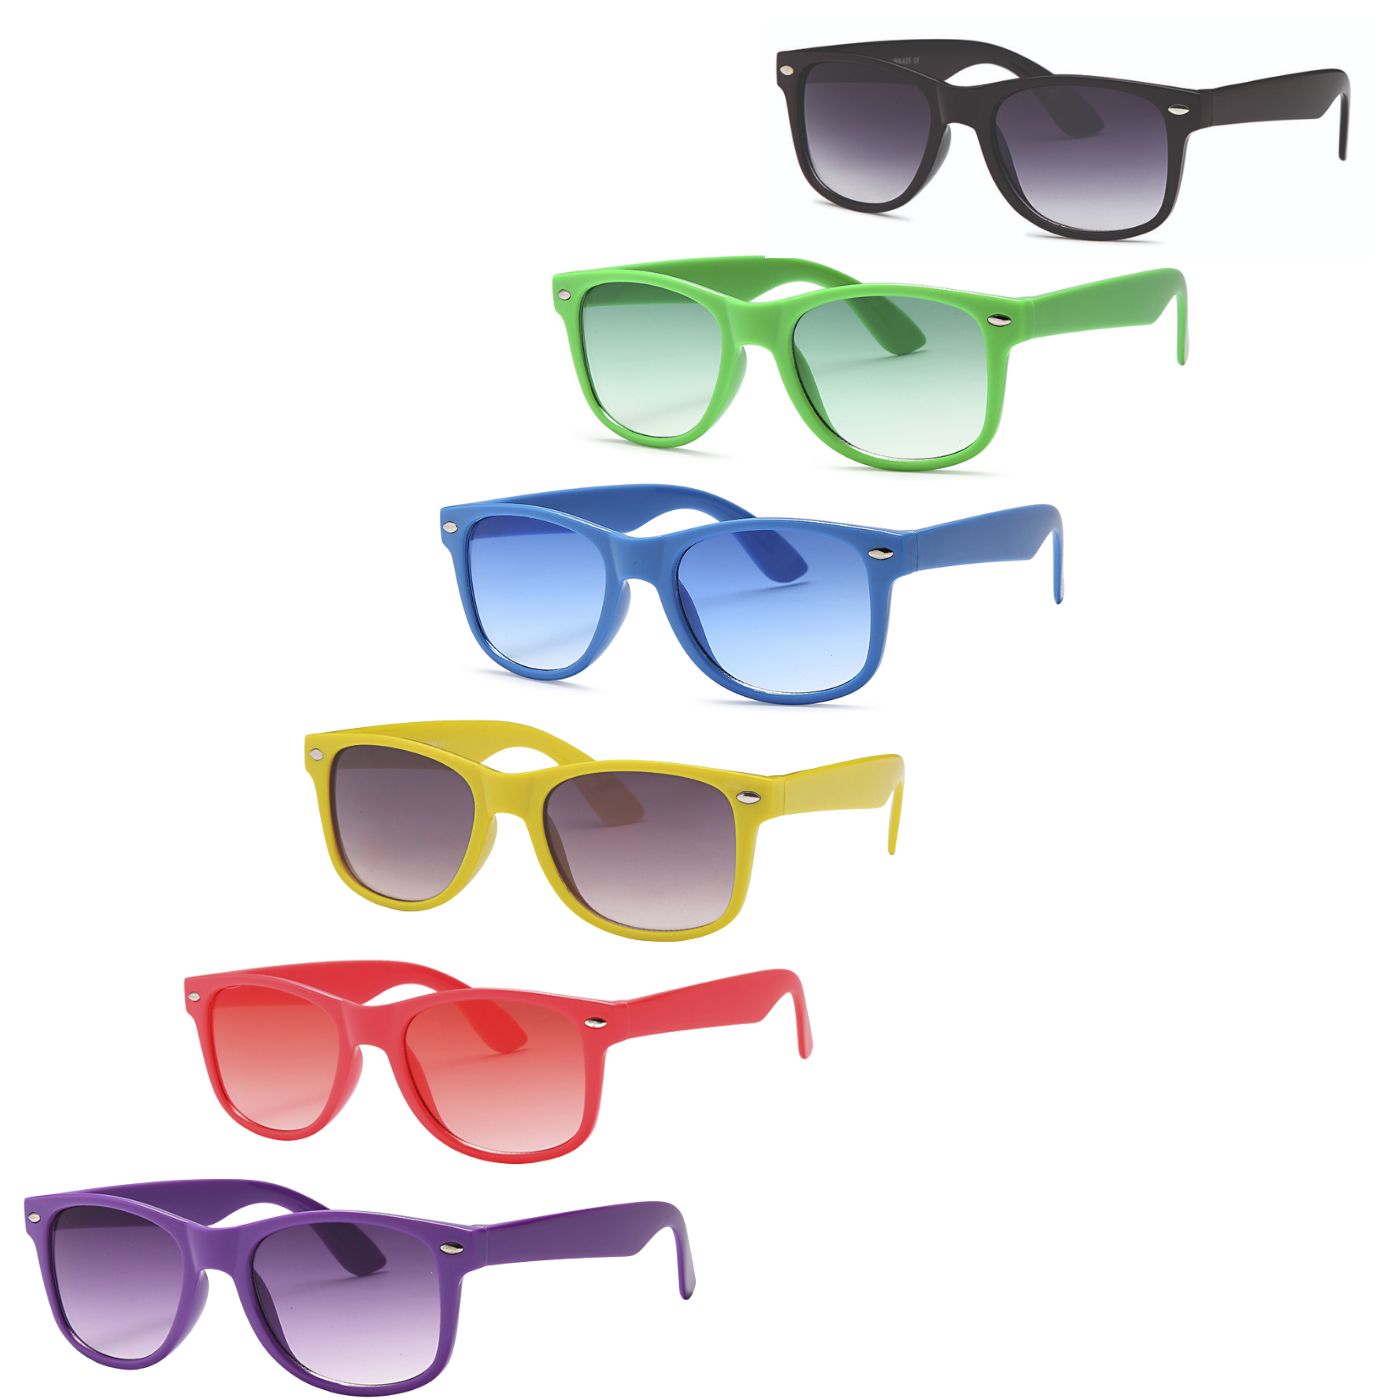 AFONiE Retro Colorblock Kids Sunglasses - Box of 12